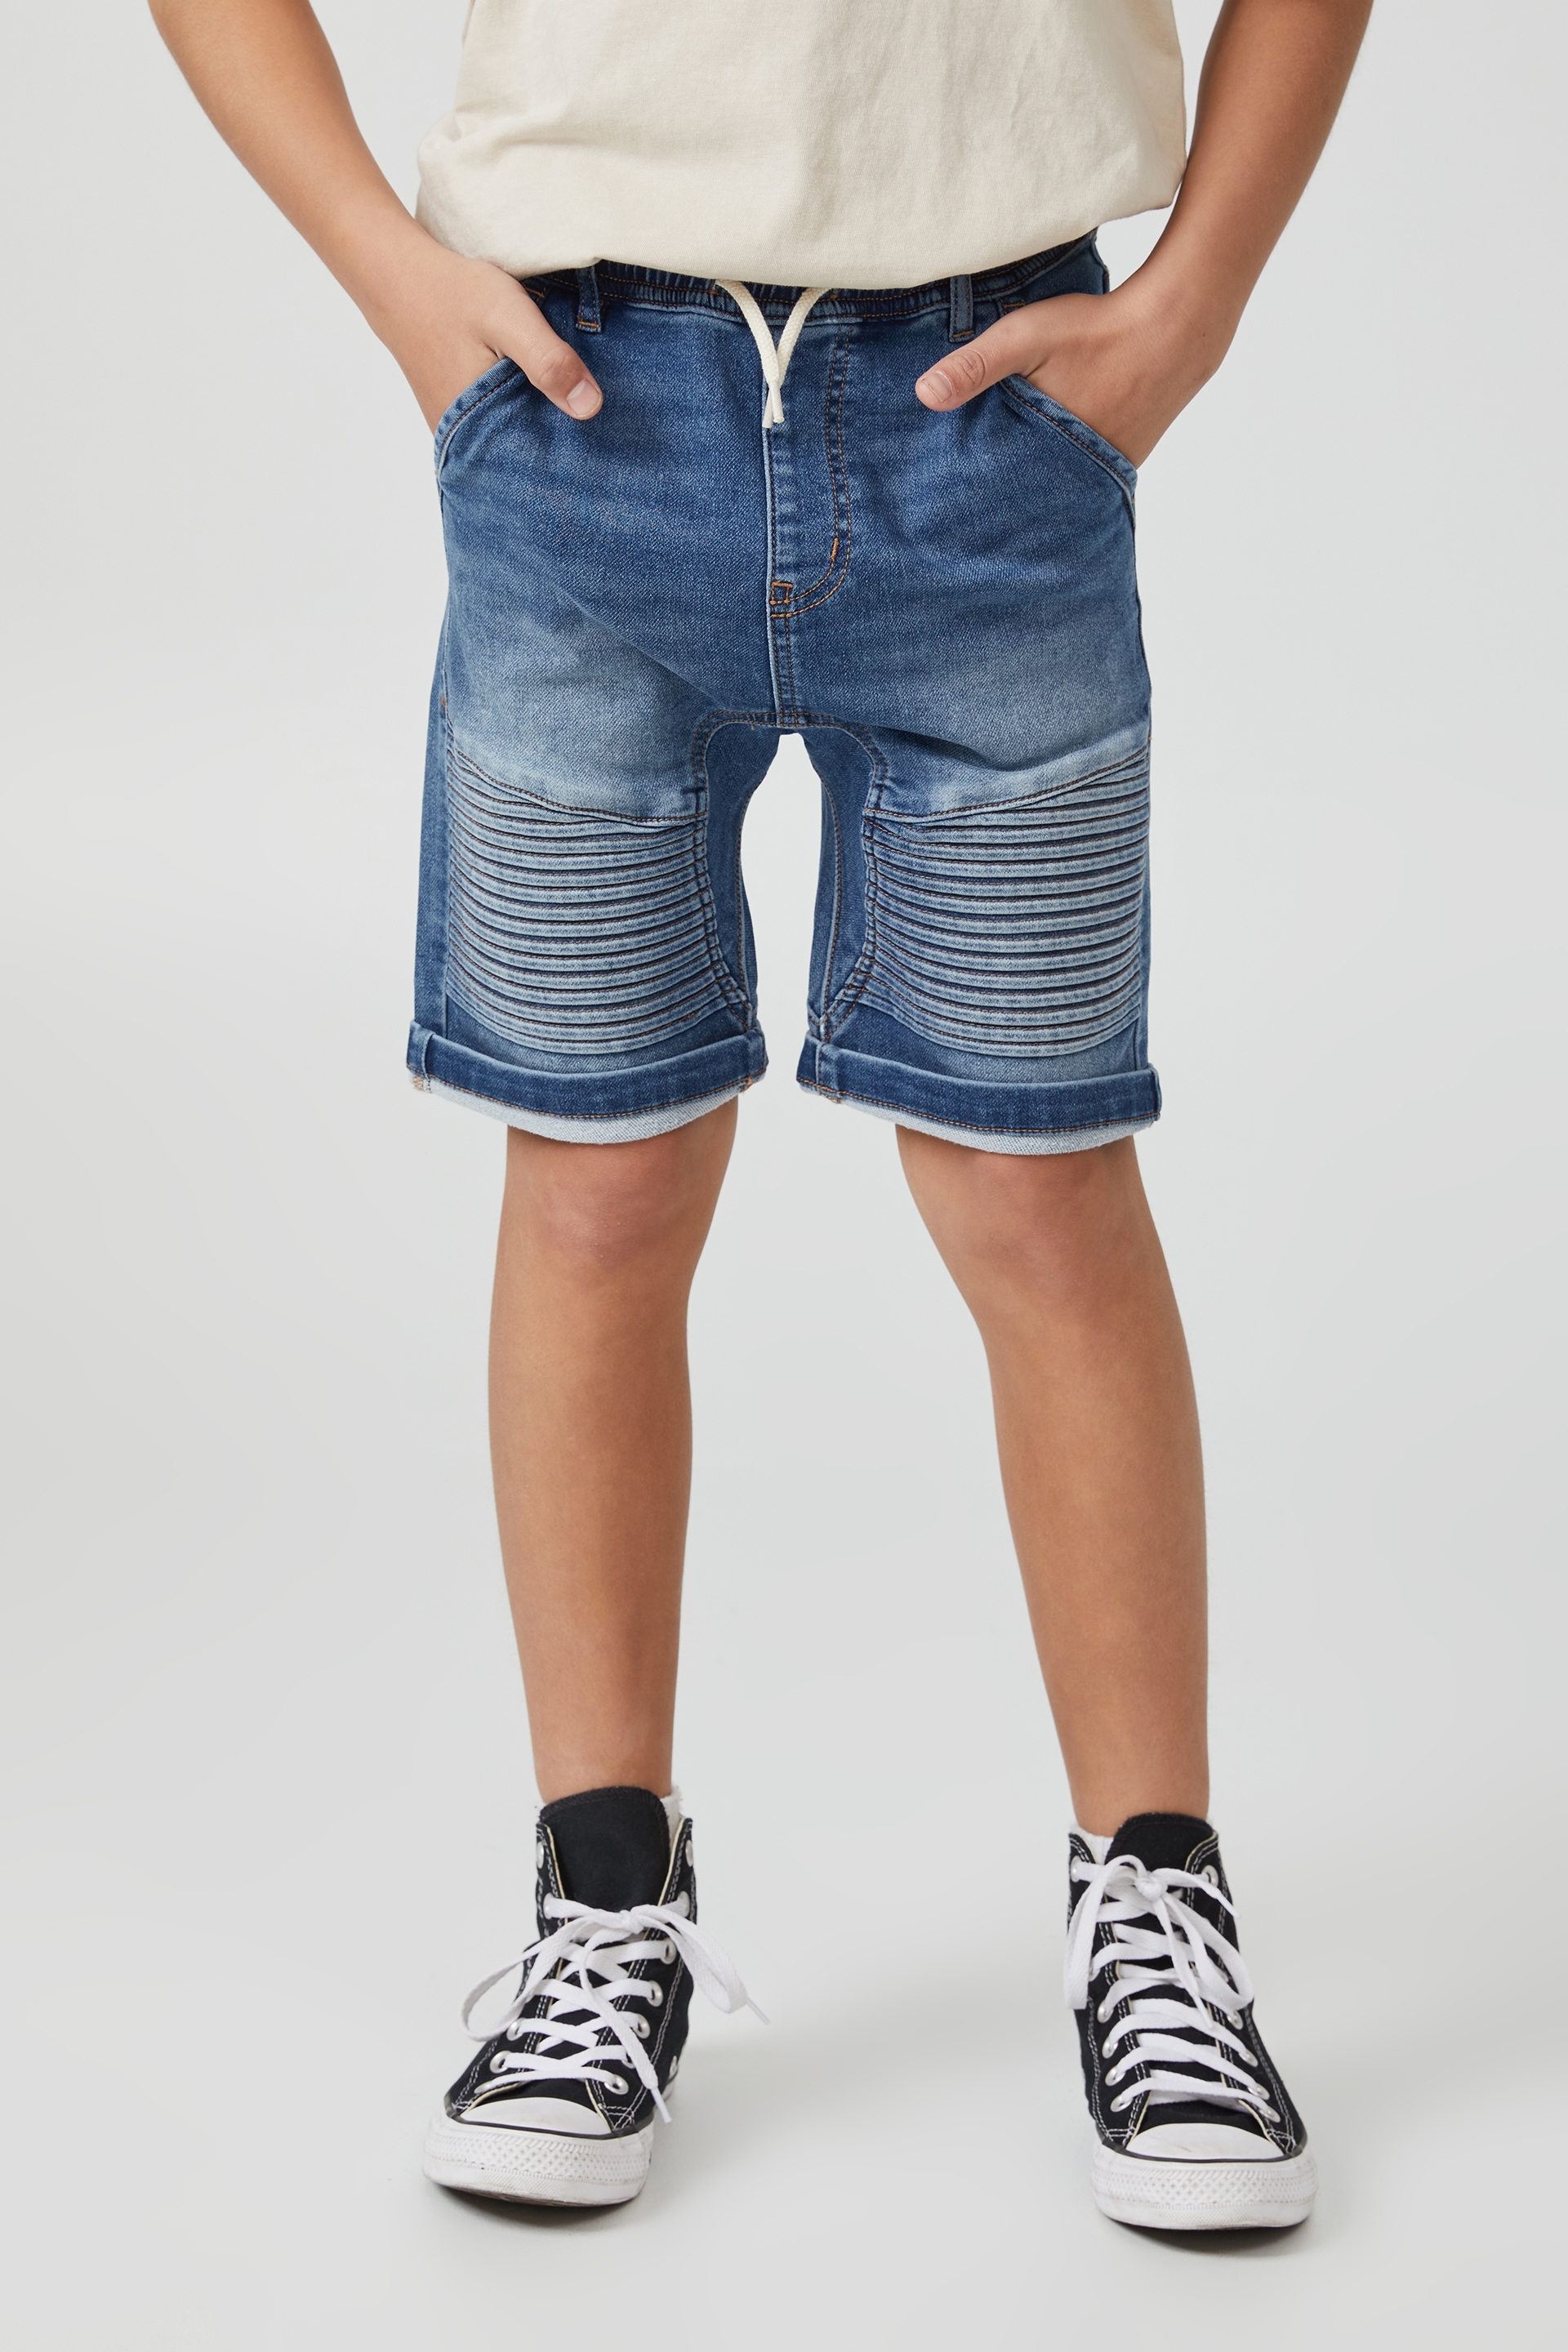 Cotton On Kids - Super Slouch Fit Short - Bondi mid blue